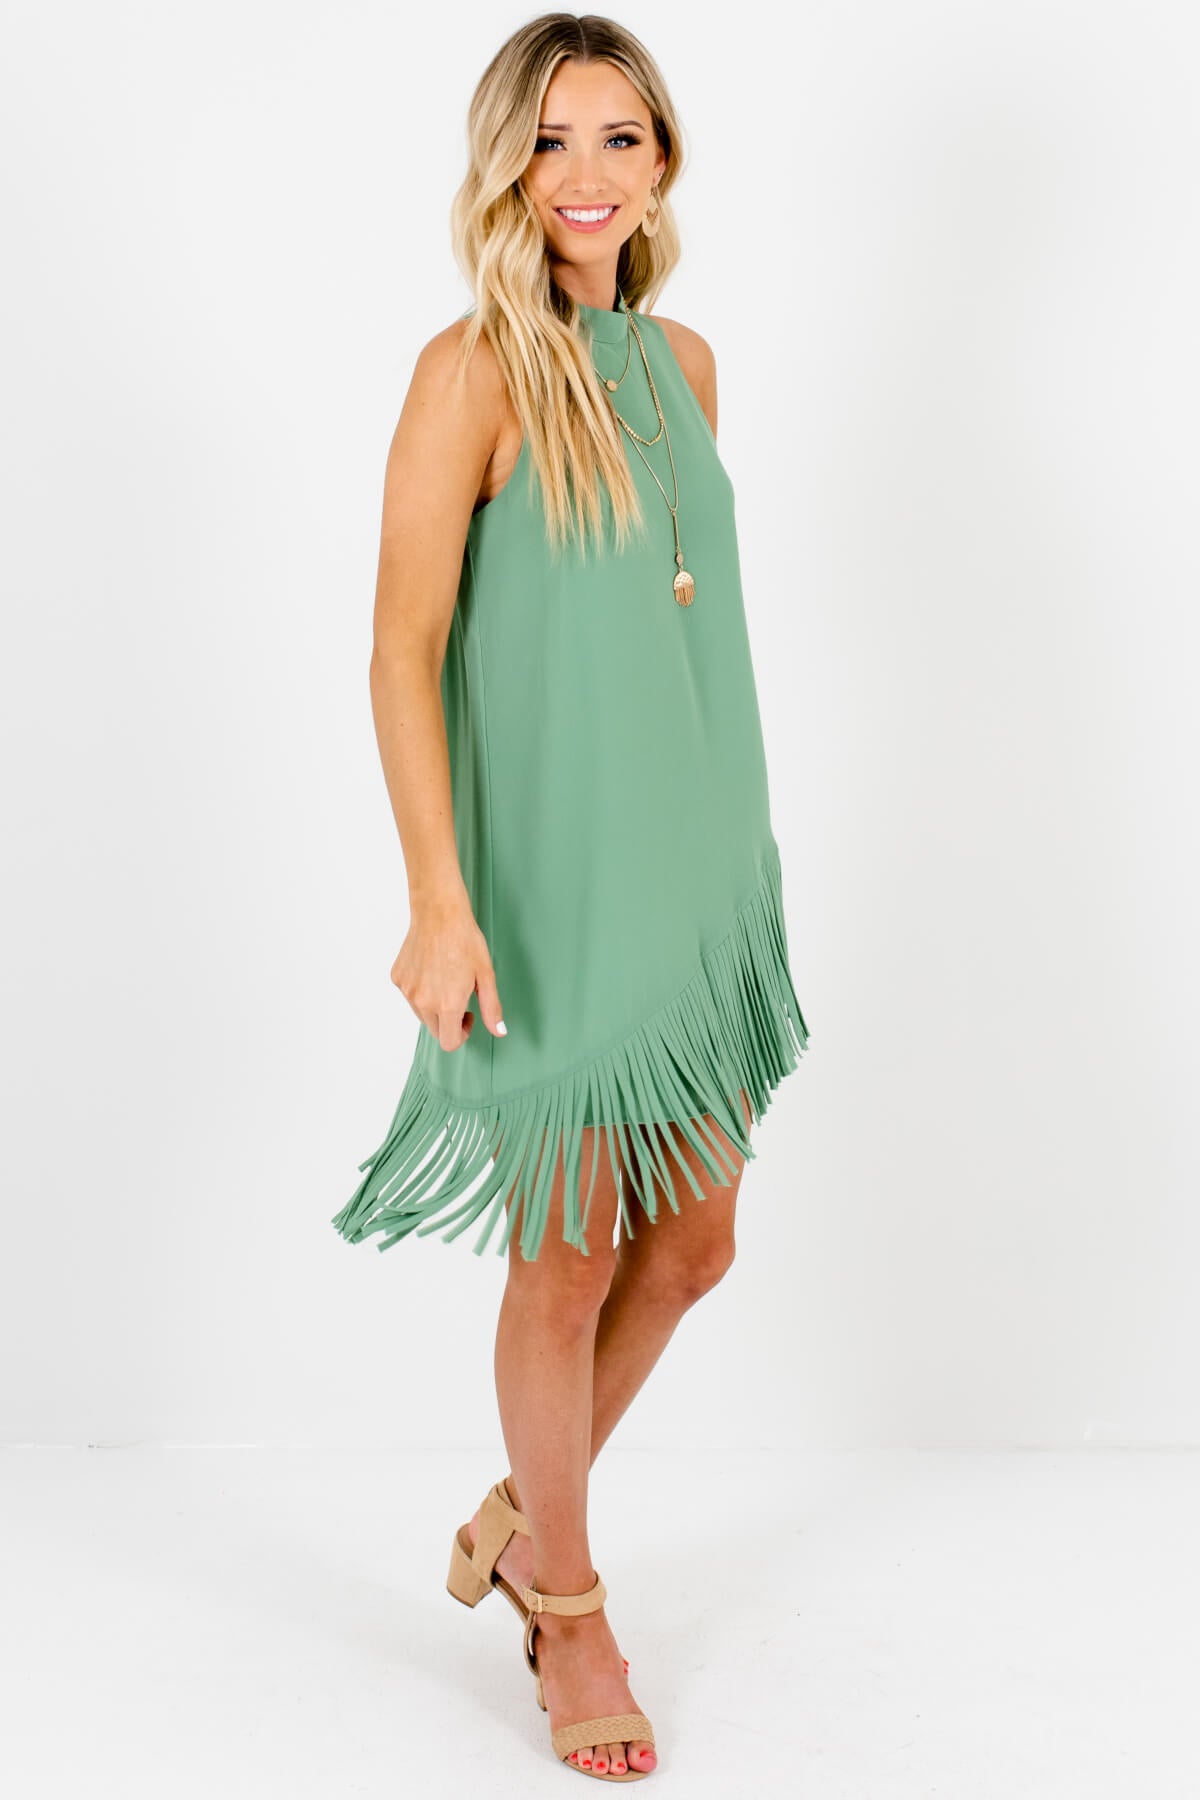 Green Asymmetrical Overlay Fringe Mini Dresses Affordable Boutique